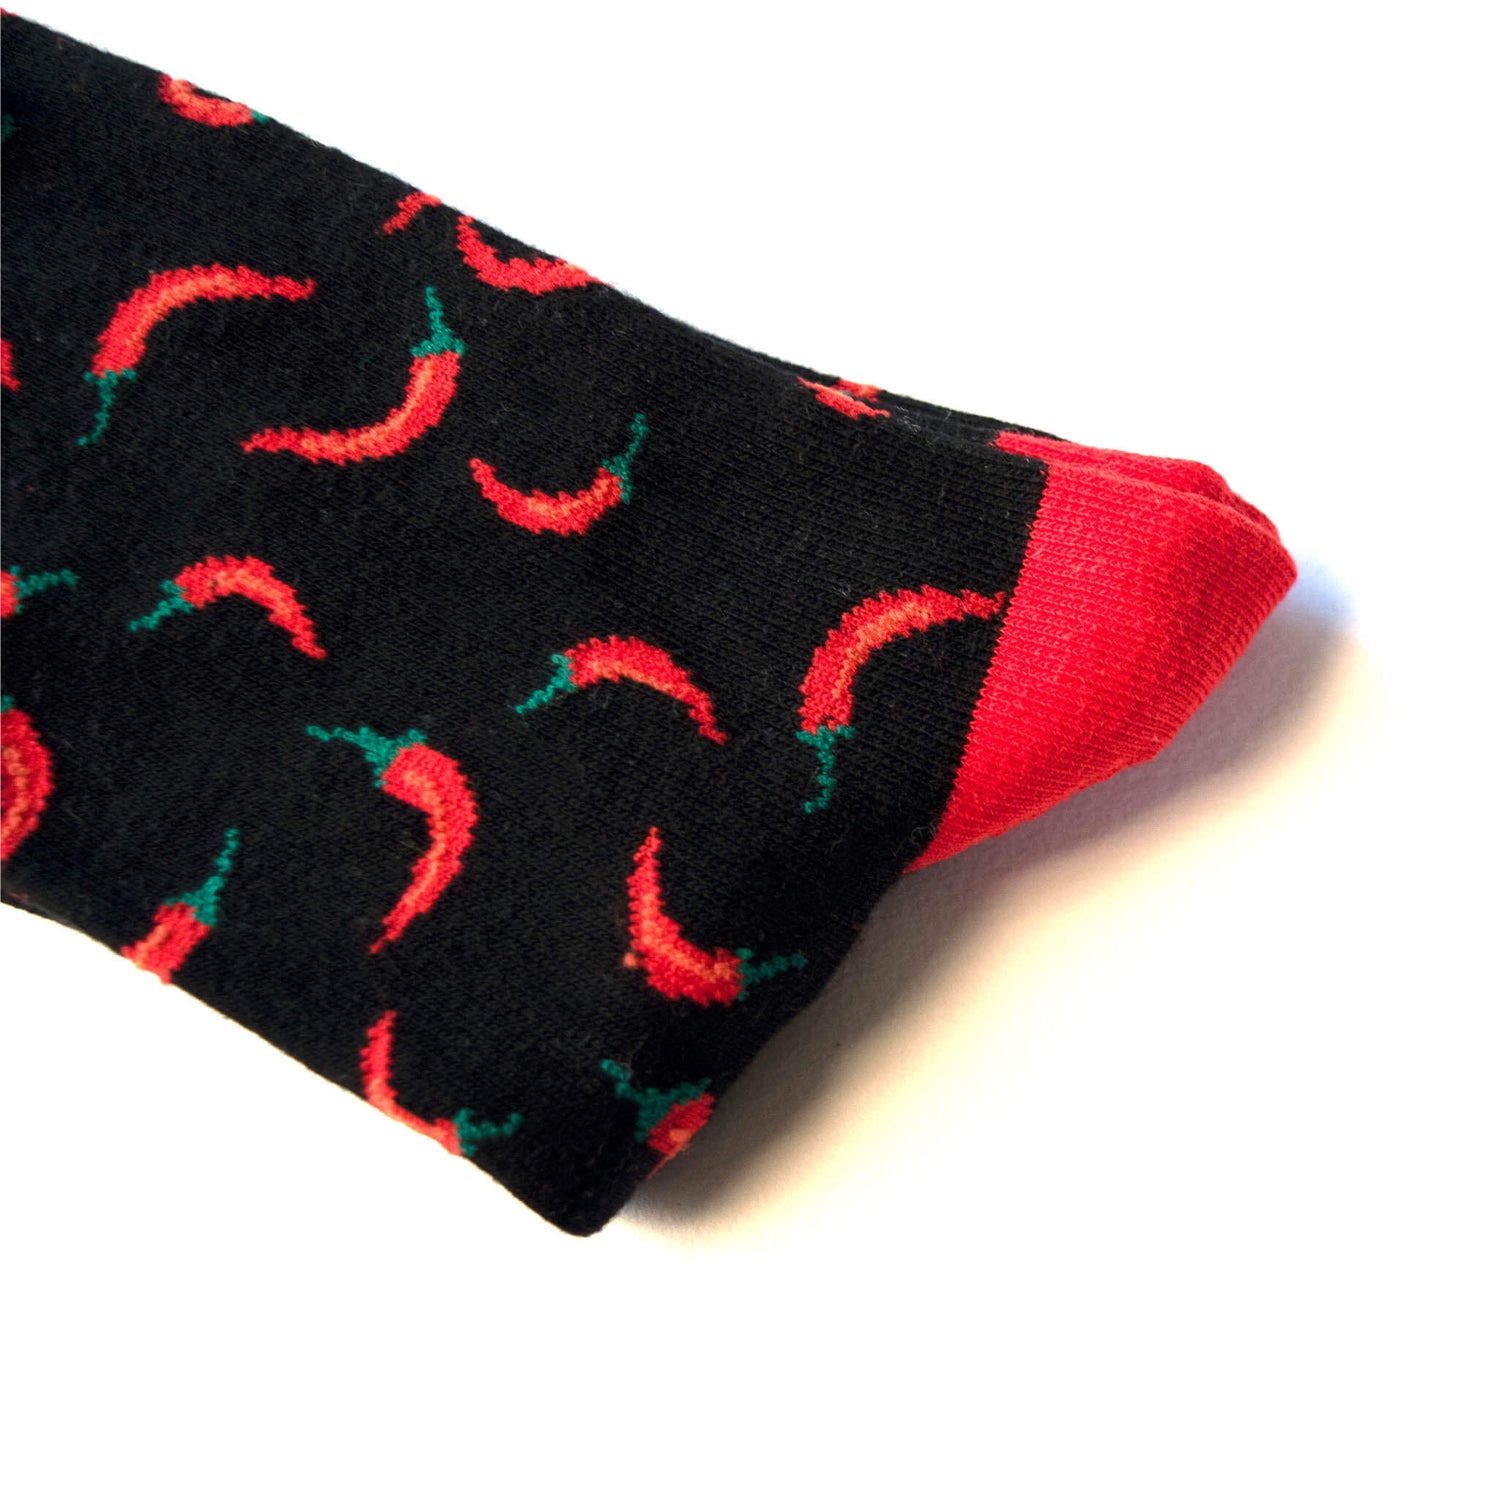 Colourful Socks For Men And Women Chilli Print